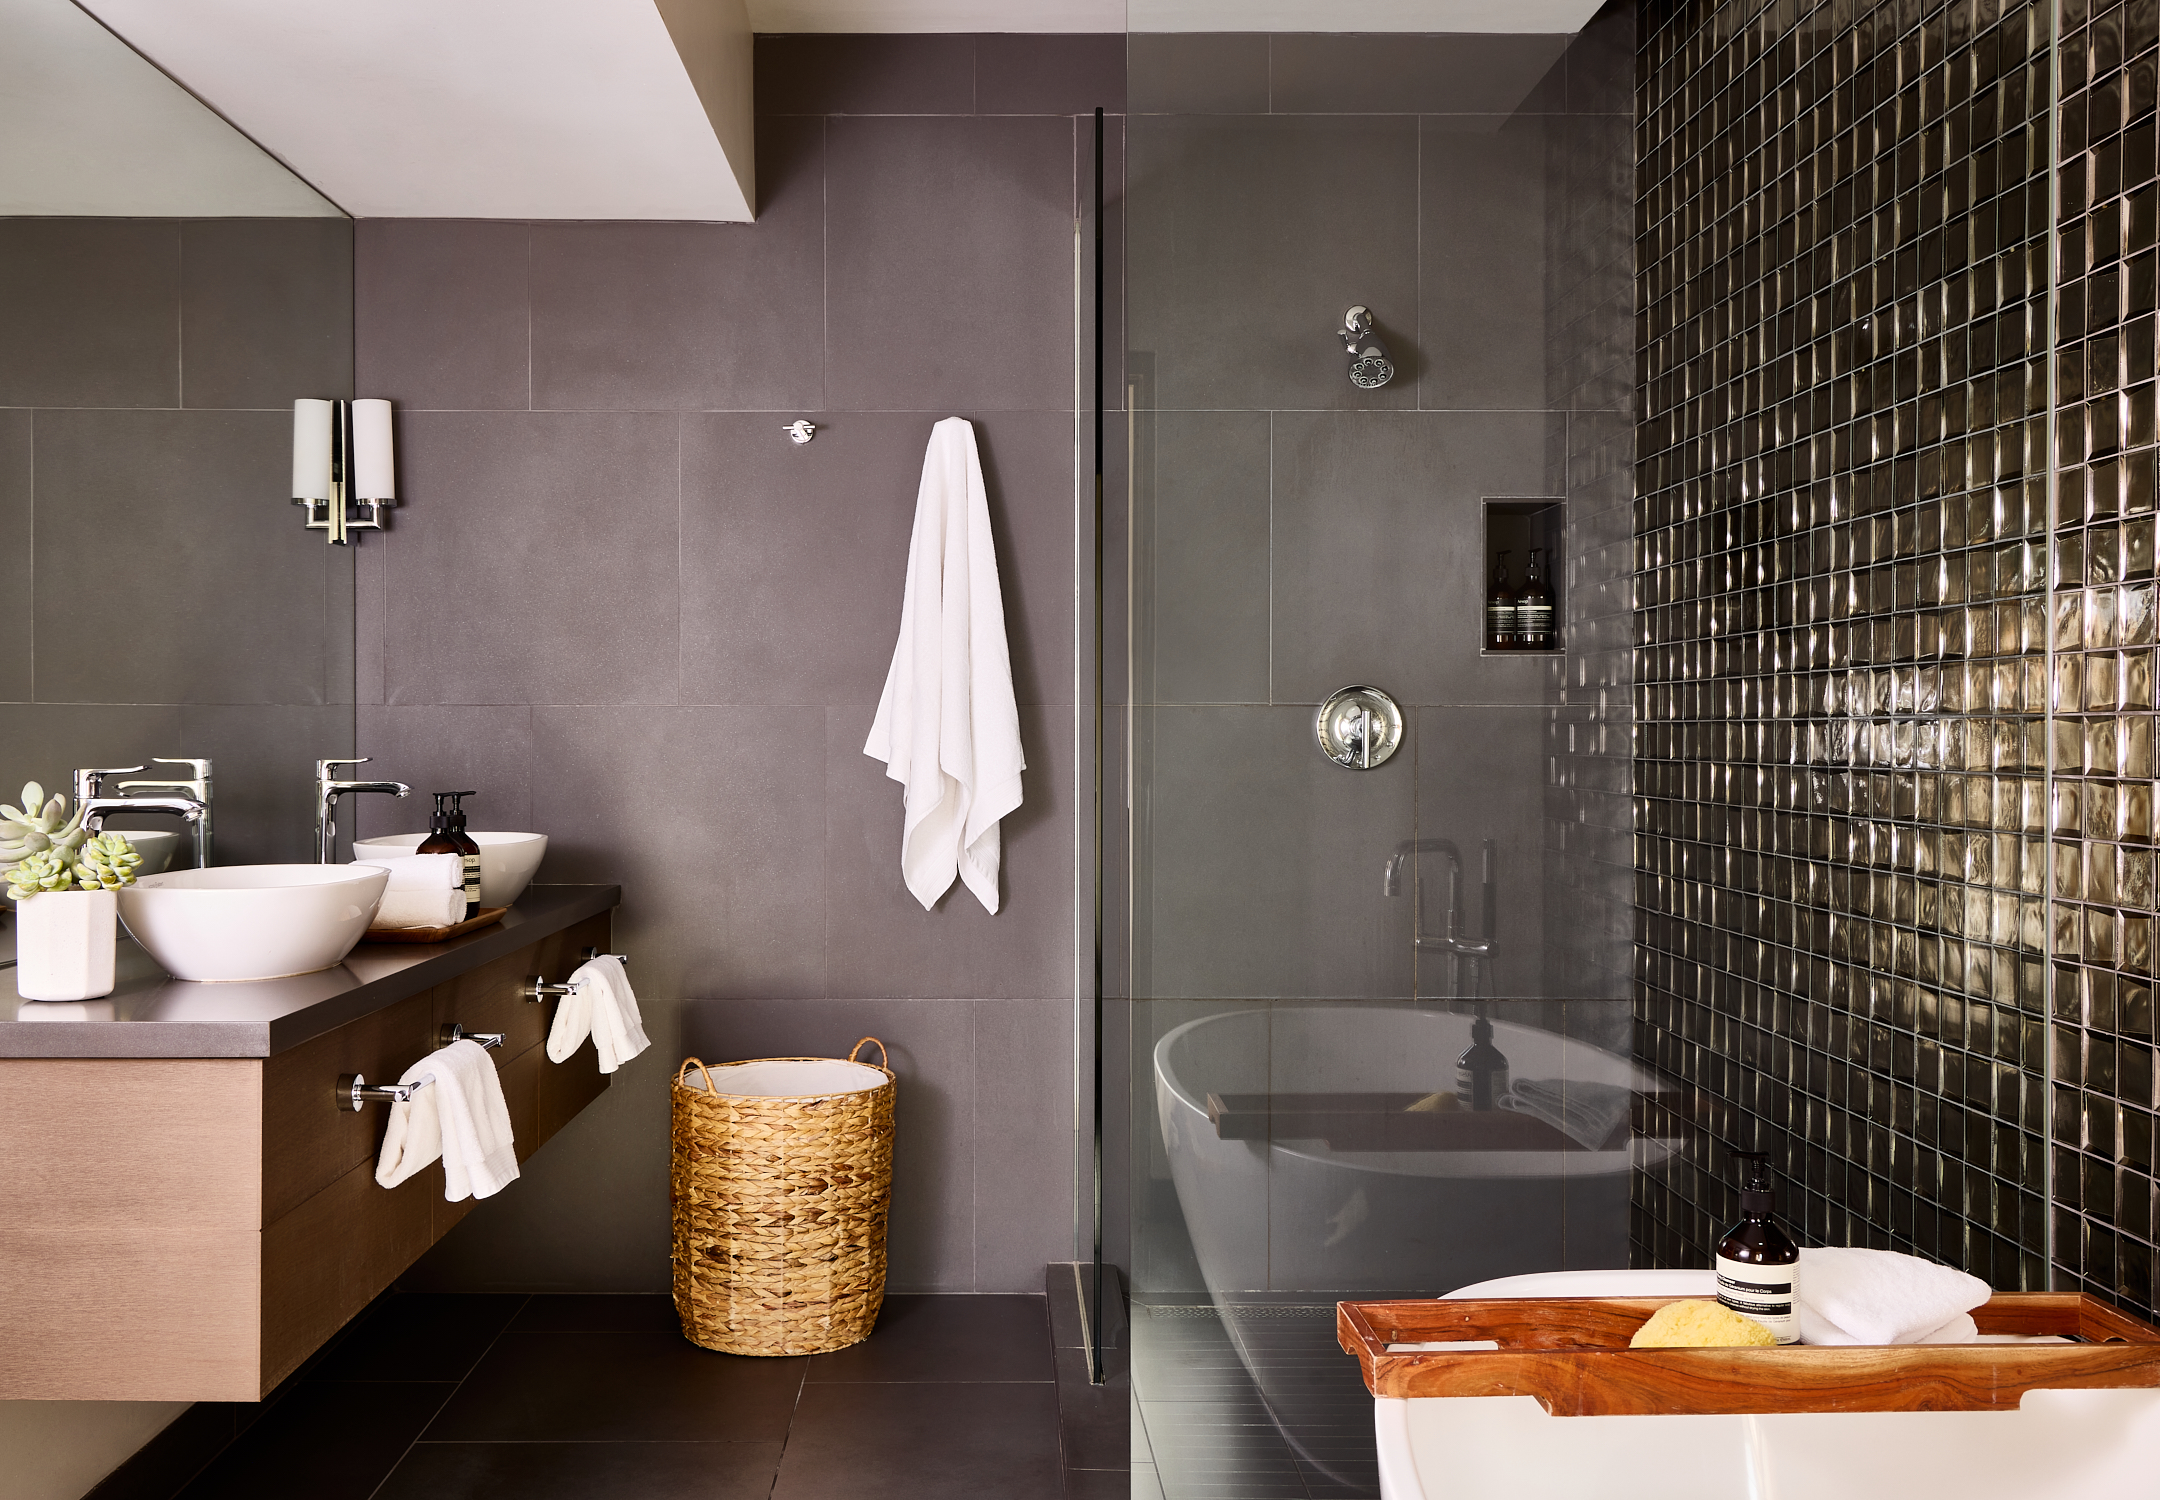 Metallic tiled bathroom with soaking tub, walk-in shower, two sinks and vanity.